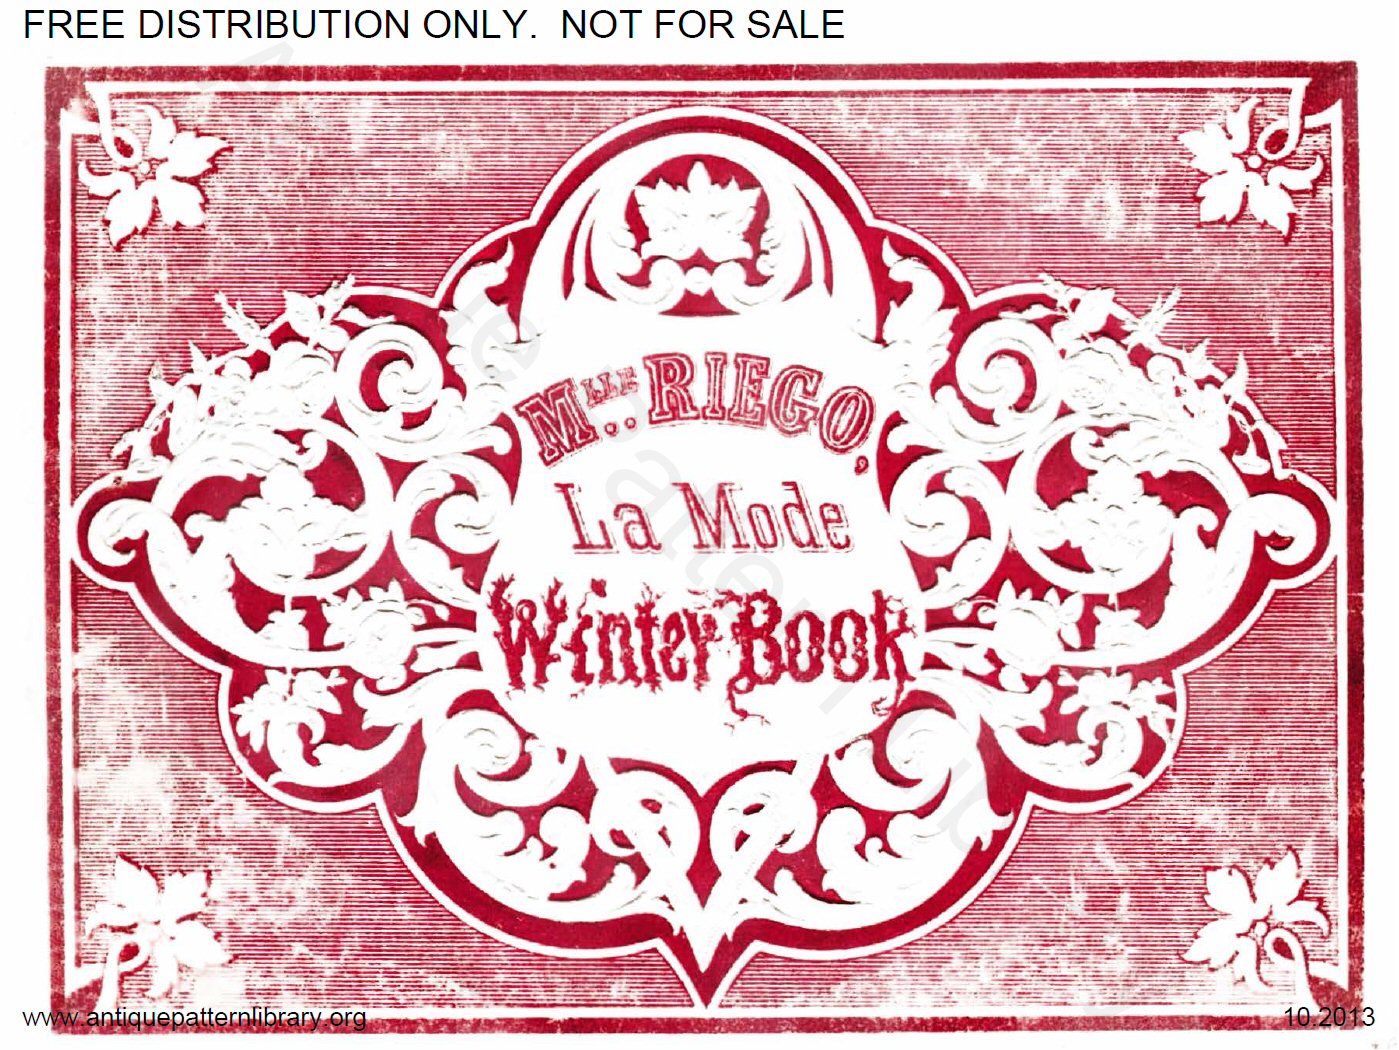 6-JA036 La Mode Winter Book.